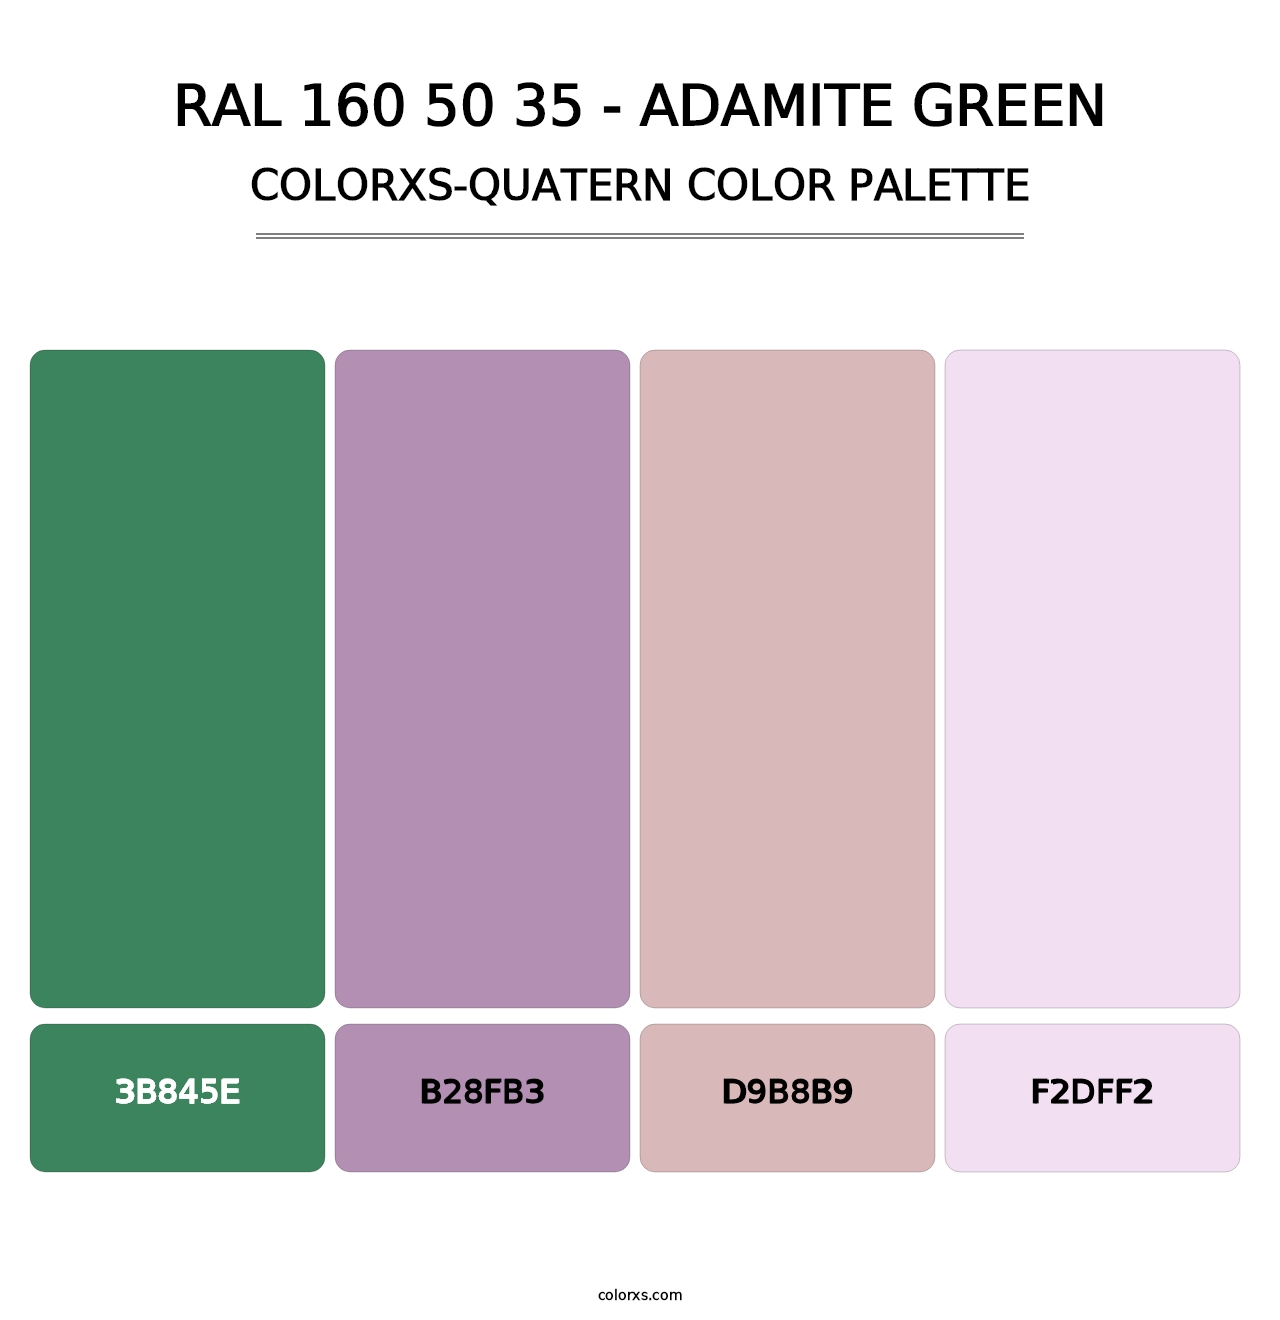 RAL 160 50 35 - Adamite Green - Colorxs Quatern Palette